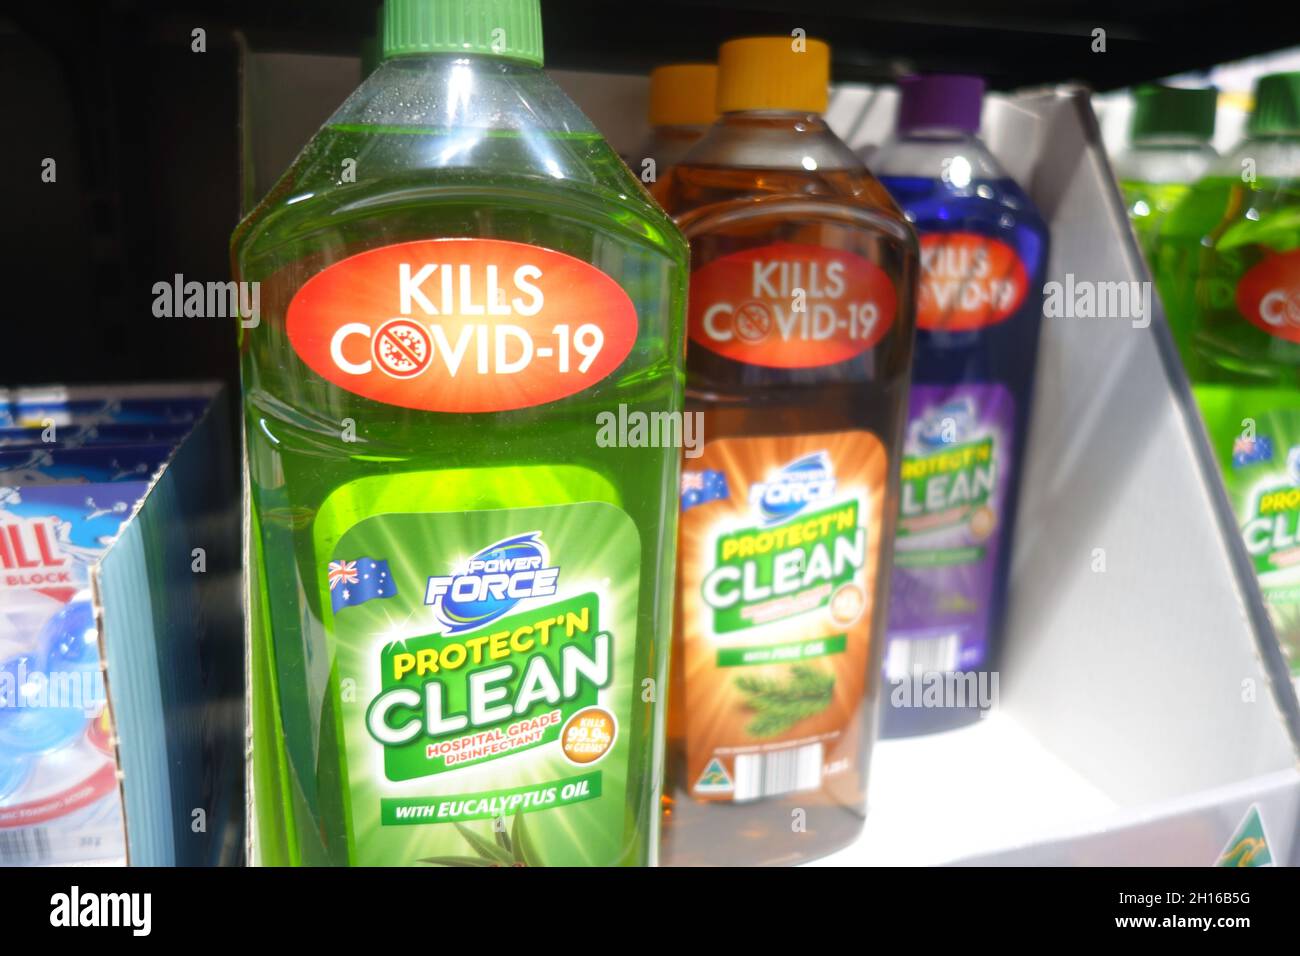 Supermarket detergent claiming to kill covid-19, Perth, Western Australia. No PR Stock Photo